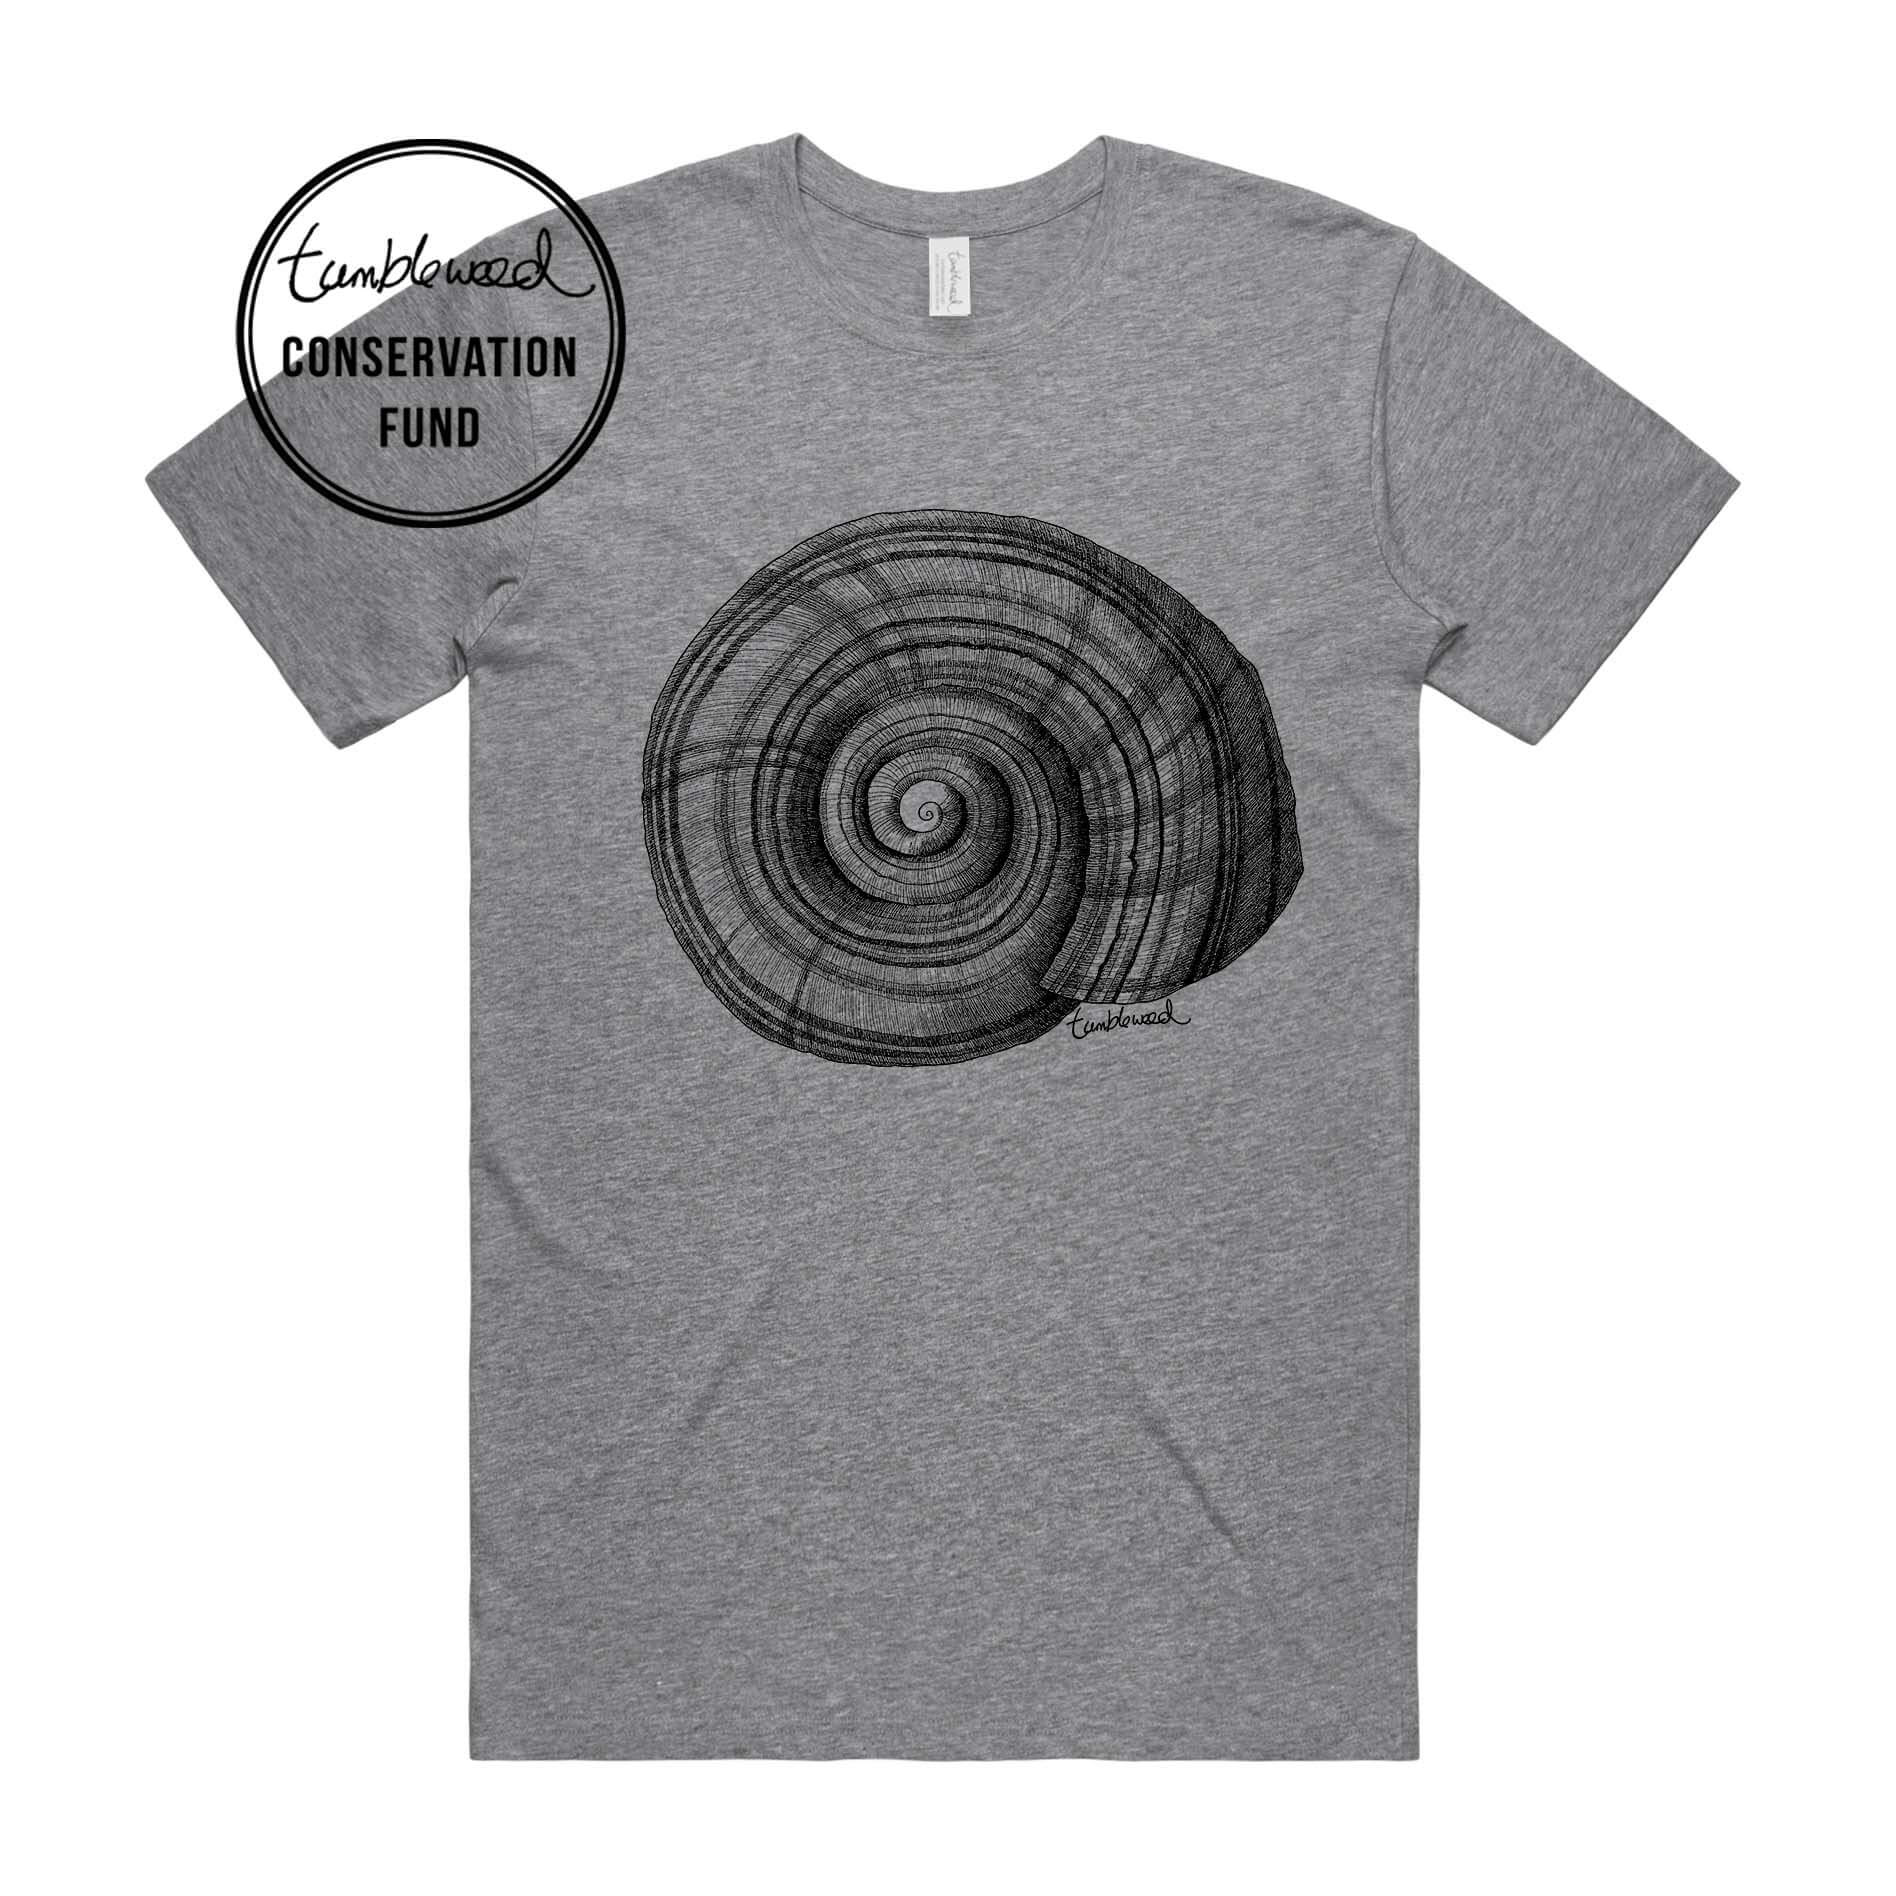 Grey marle, female t-shirt featuring a screen printed NZ Snail design.